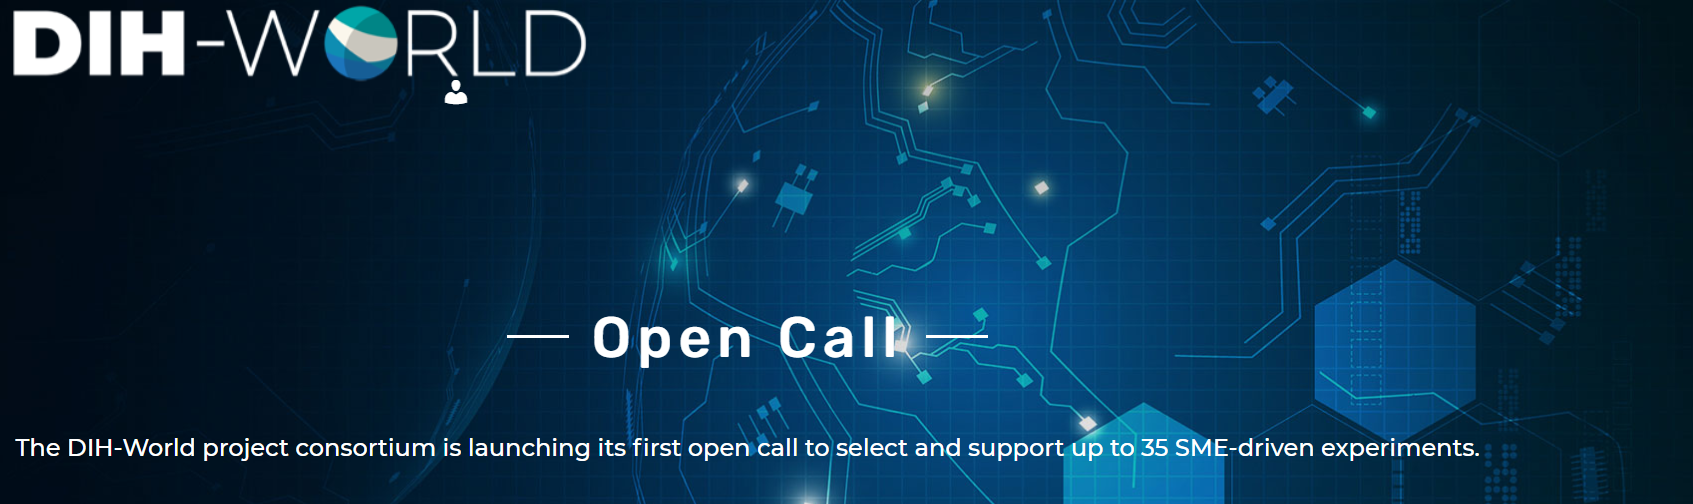 DIH-World Open Call